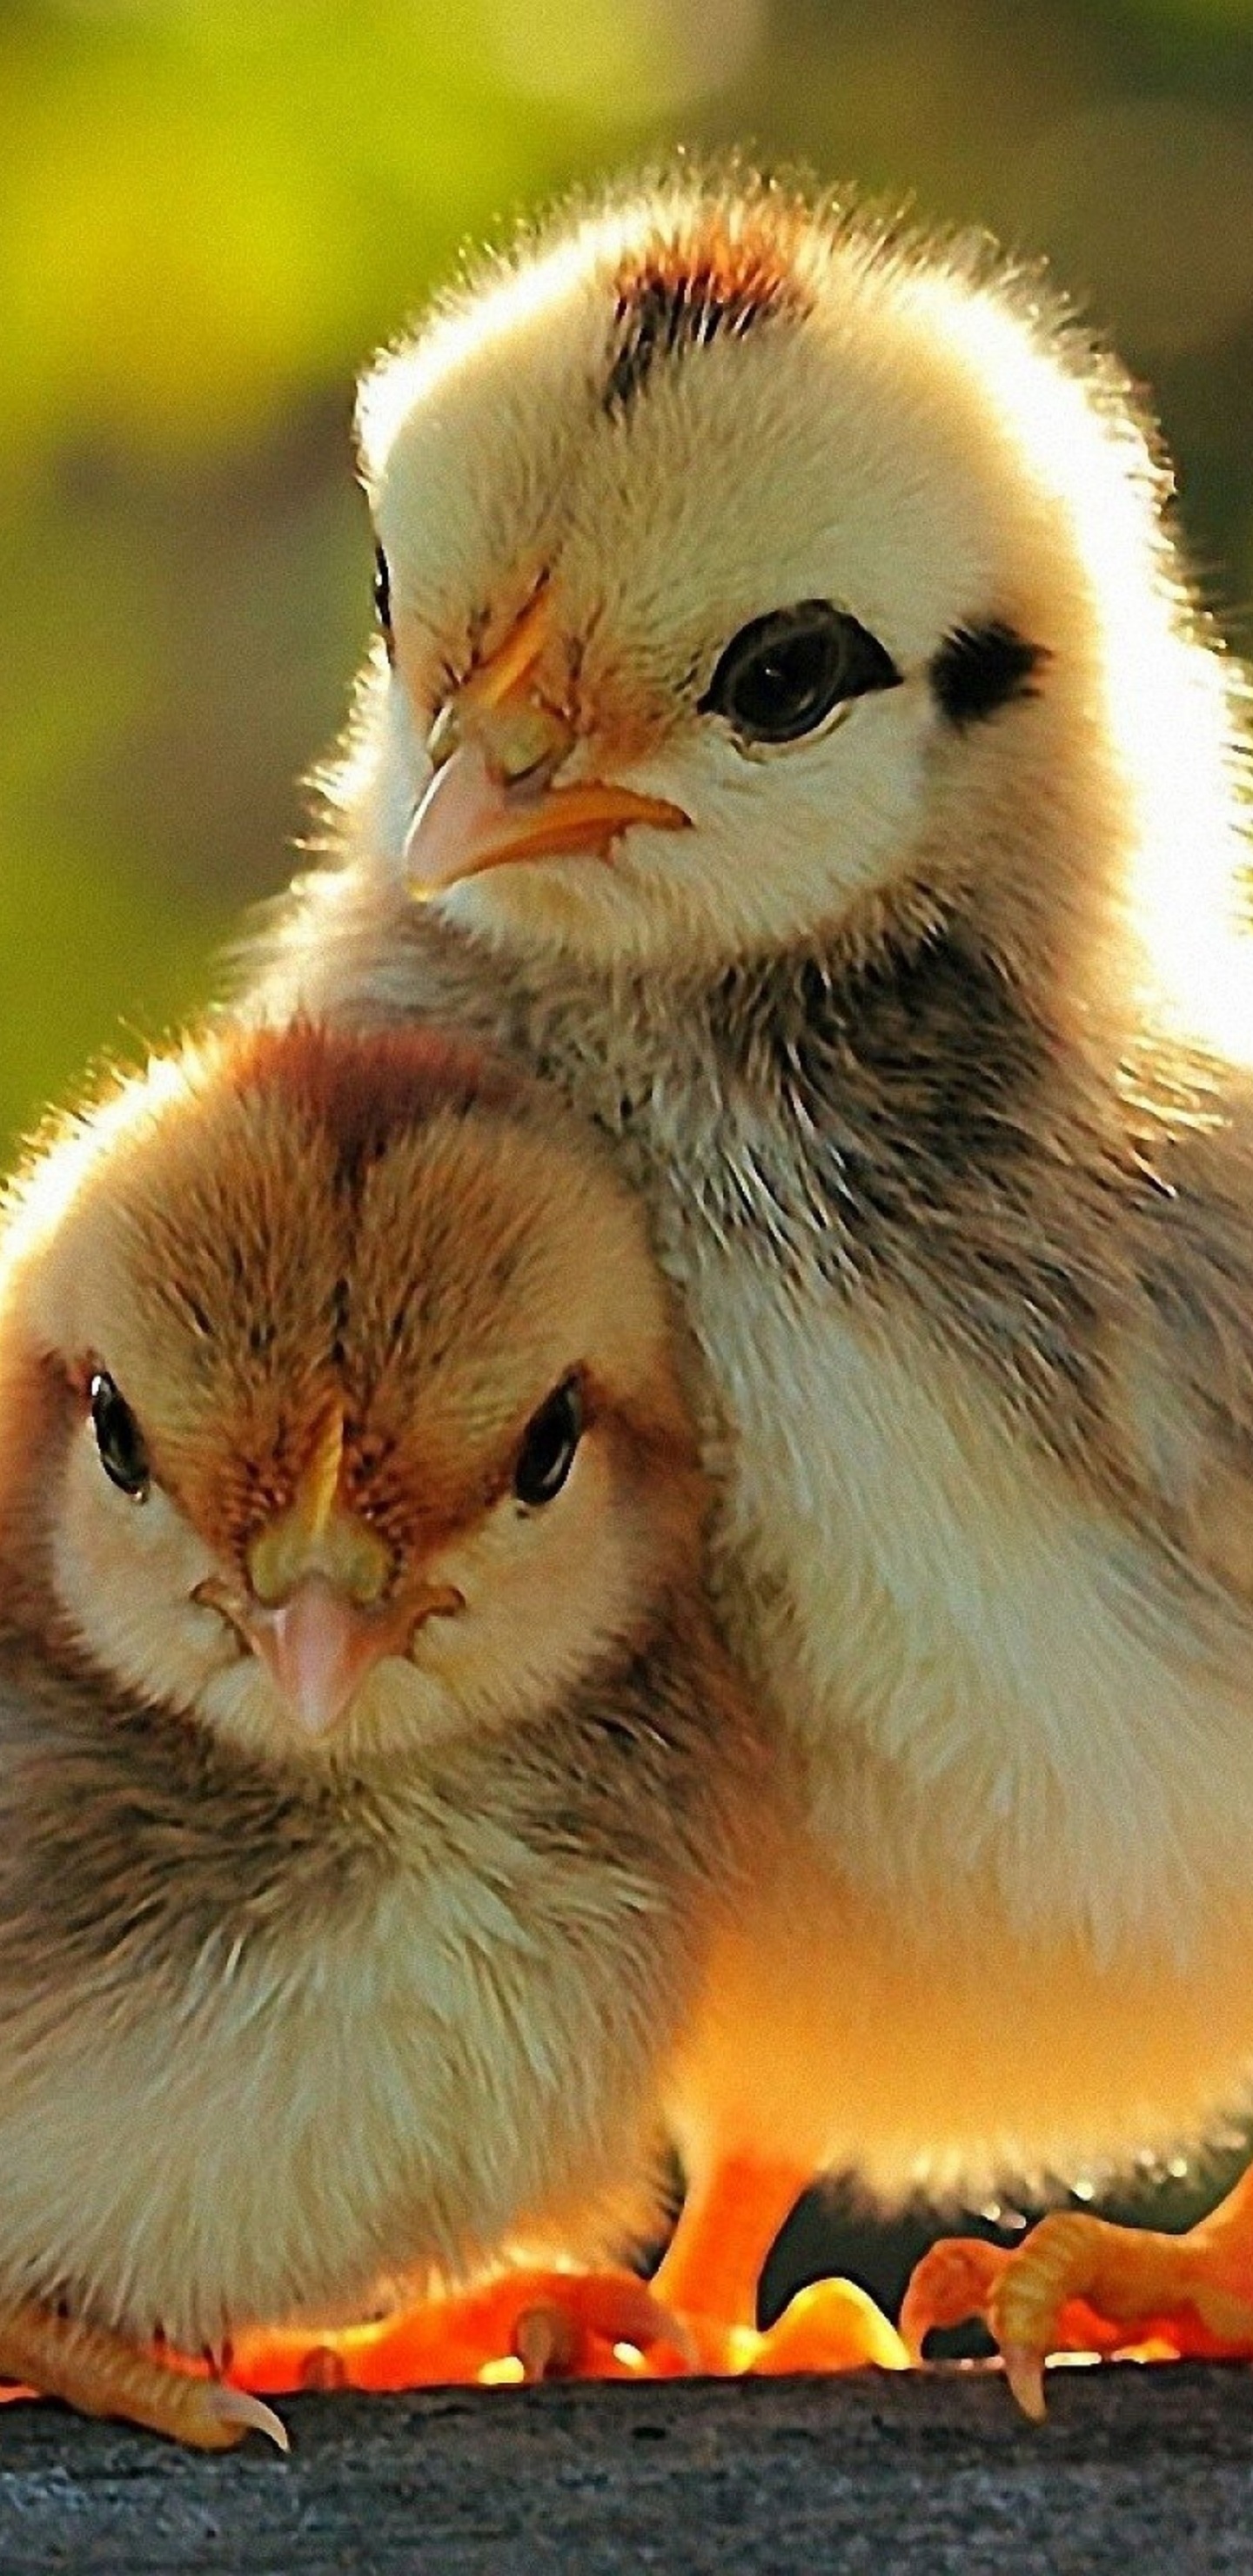 Two Lovely Chicken Sunshine Spring